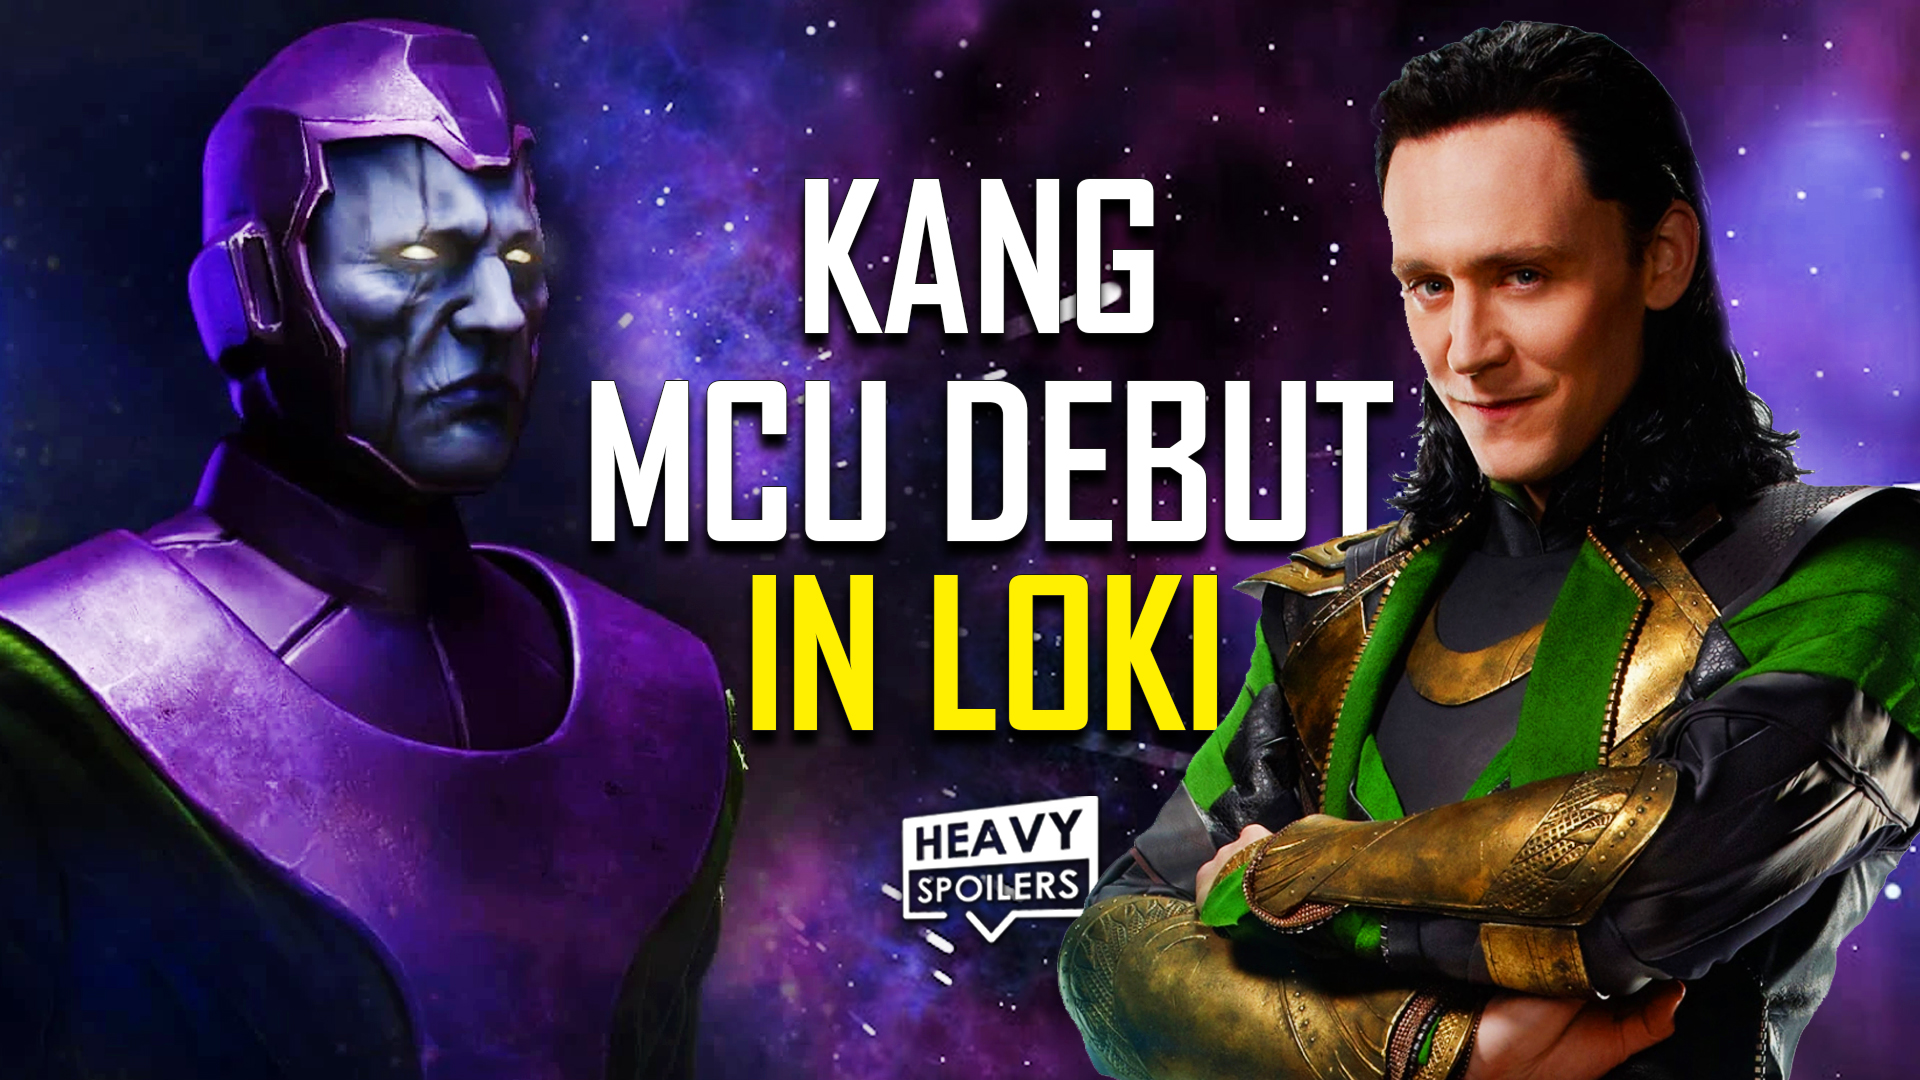 loki disney plus plot leak marvel mcu show to introduce kang the Conquerer to replace thanos as next avengers 5 bad guy 4K